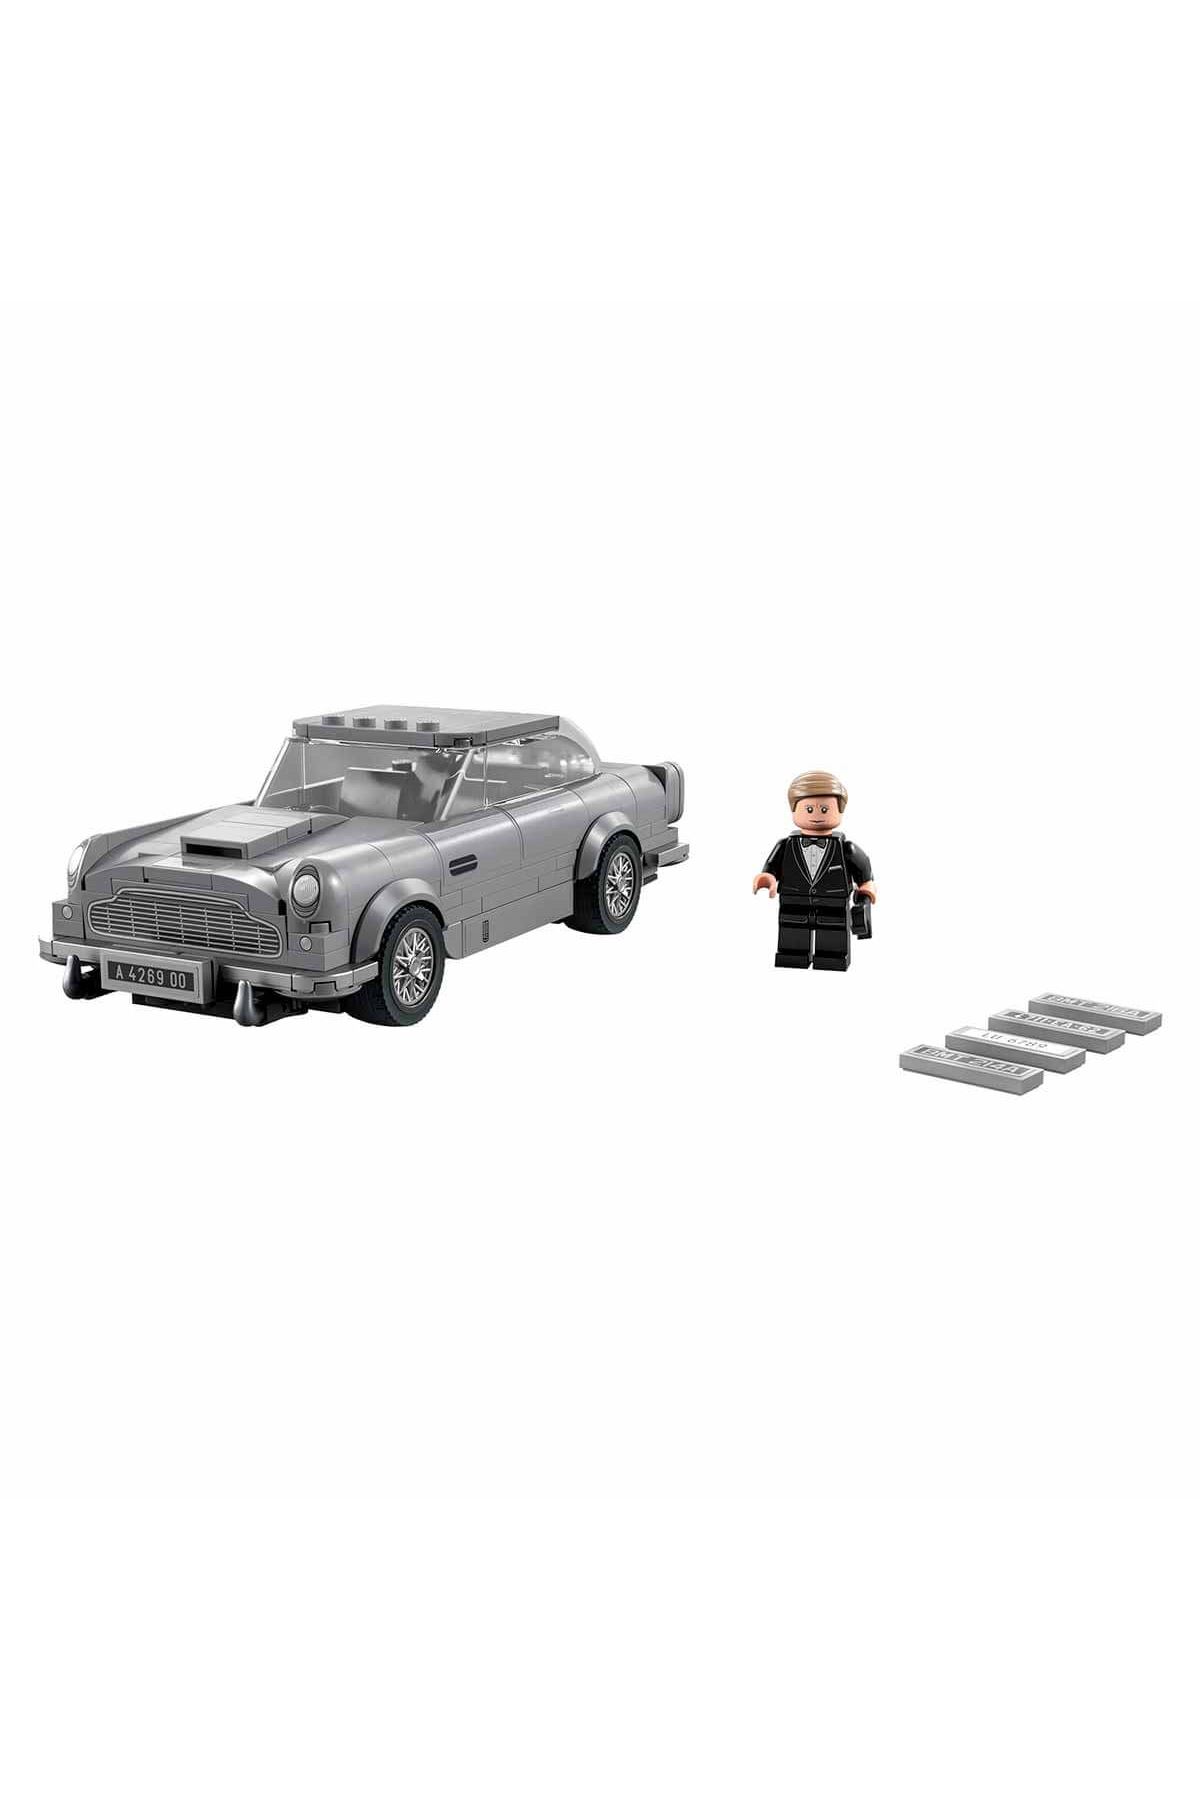 Lego Speed Champions 007 Aston Martin 76911